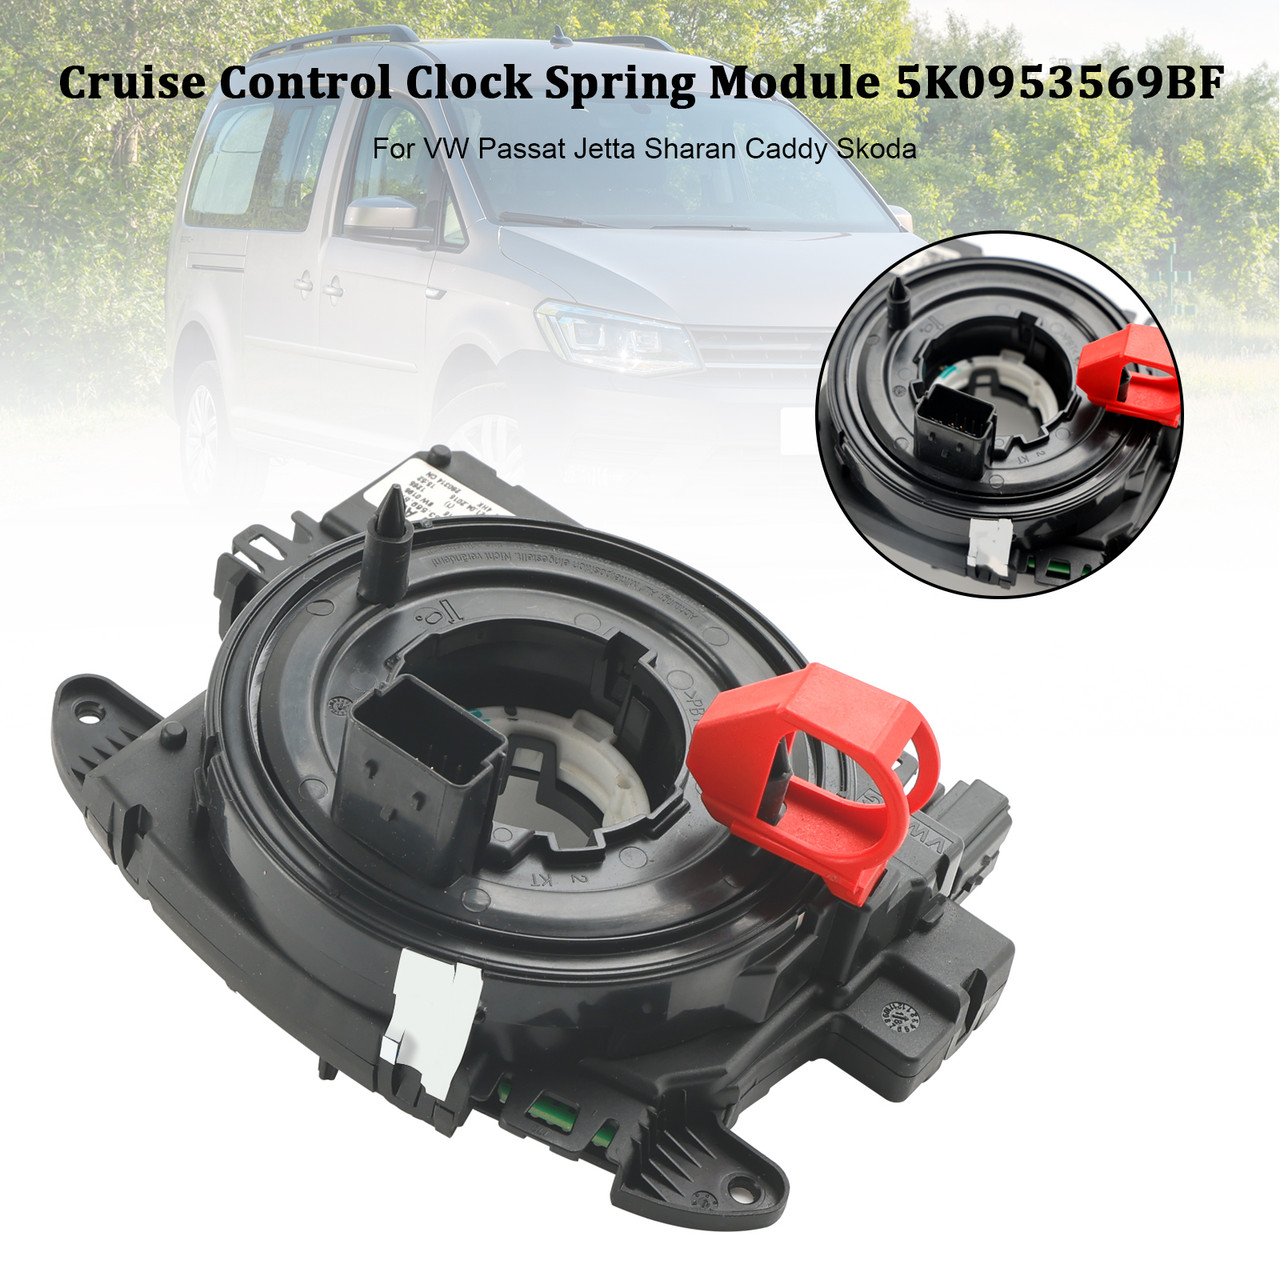 Cruise Control Clock Spring Module 5K0953569BF For VW Passat Jetta Sharan Caddy